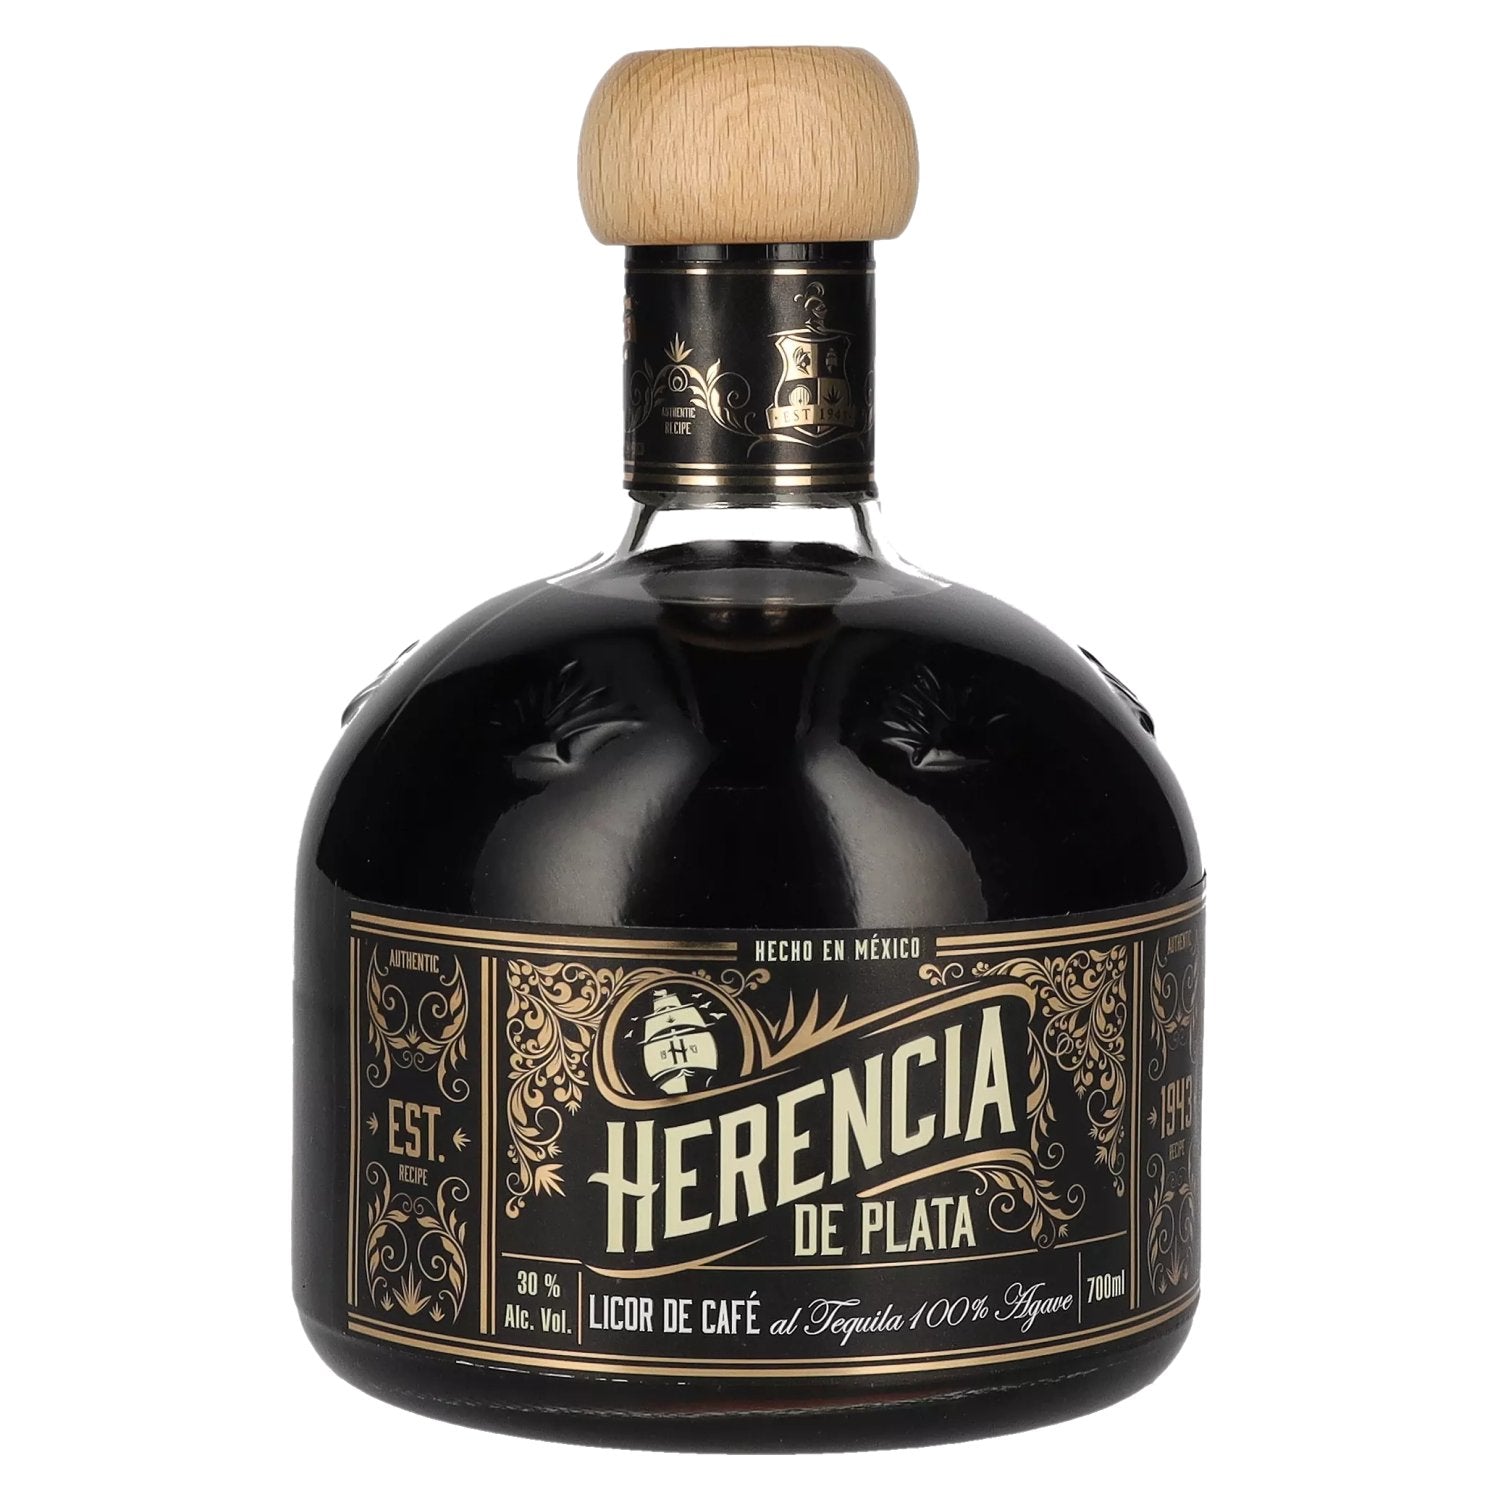 Herencia de Plata LICOR DE CAFE al Tequila 100% Agave 30% Vol. 0,7l